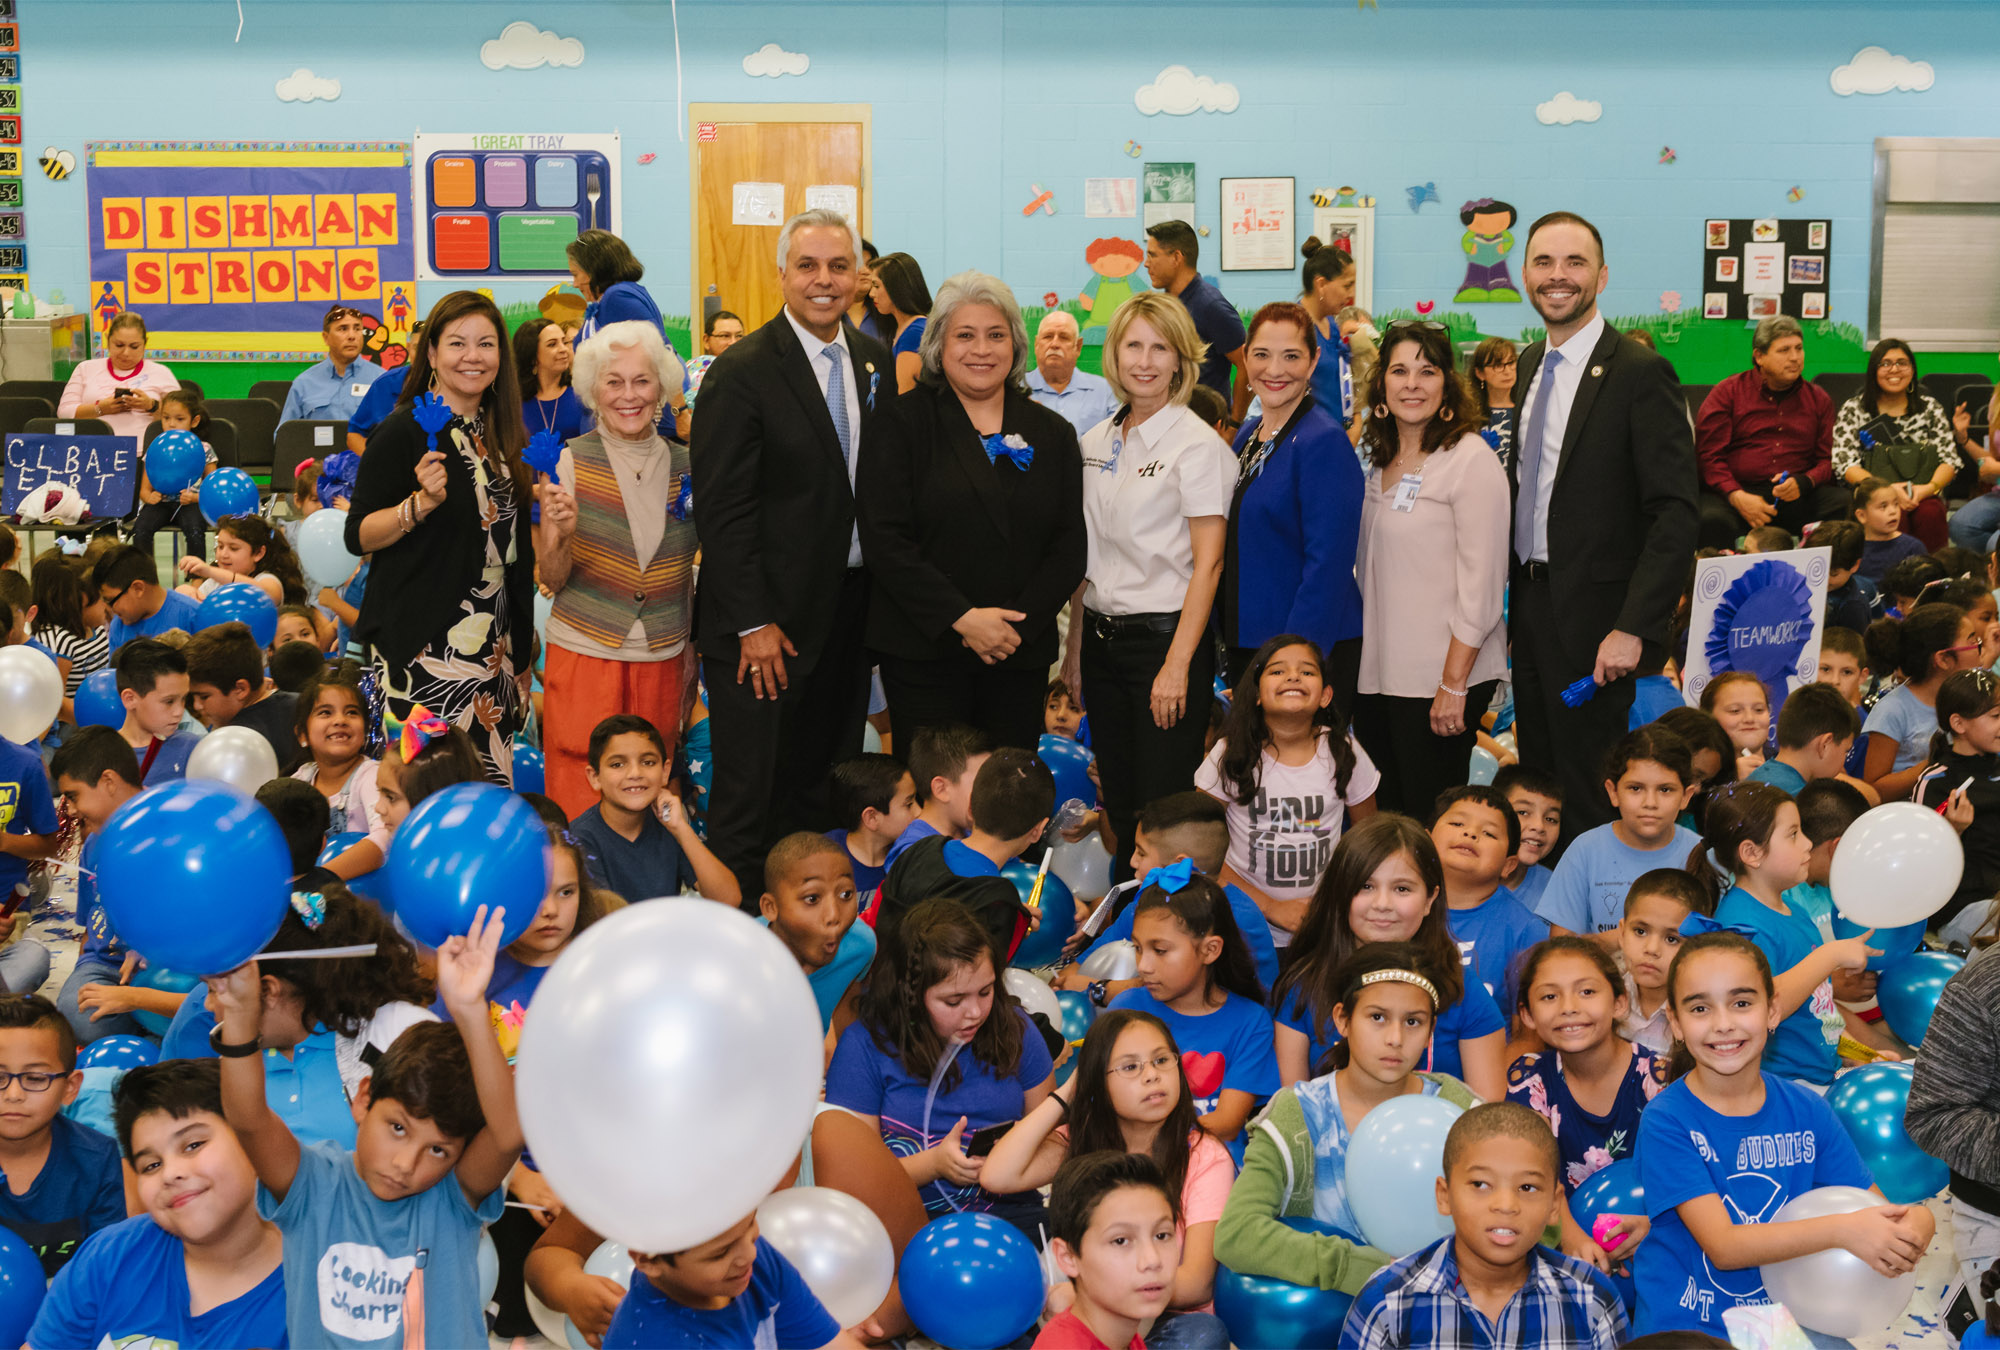 Dishman Elementary recognized as National Blue Ribbon School